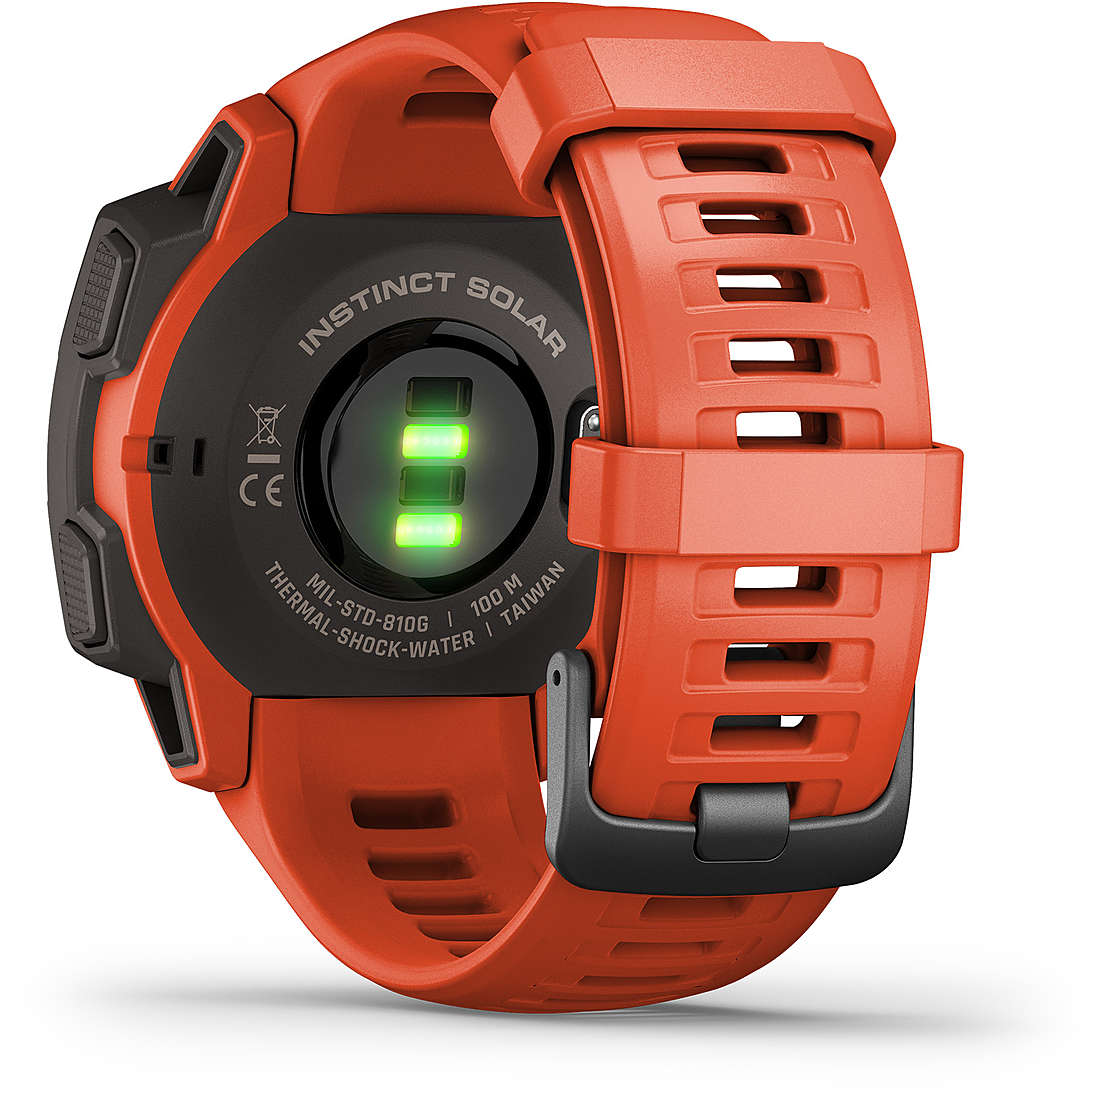 Smartwatch Garmin Instinct orologio uomo 010-02293-20